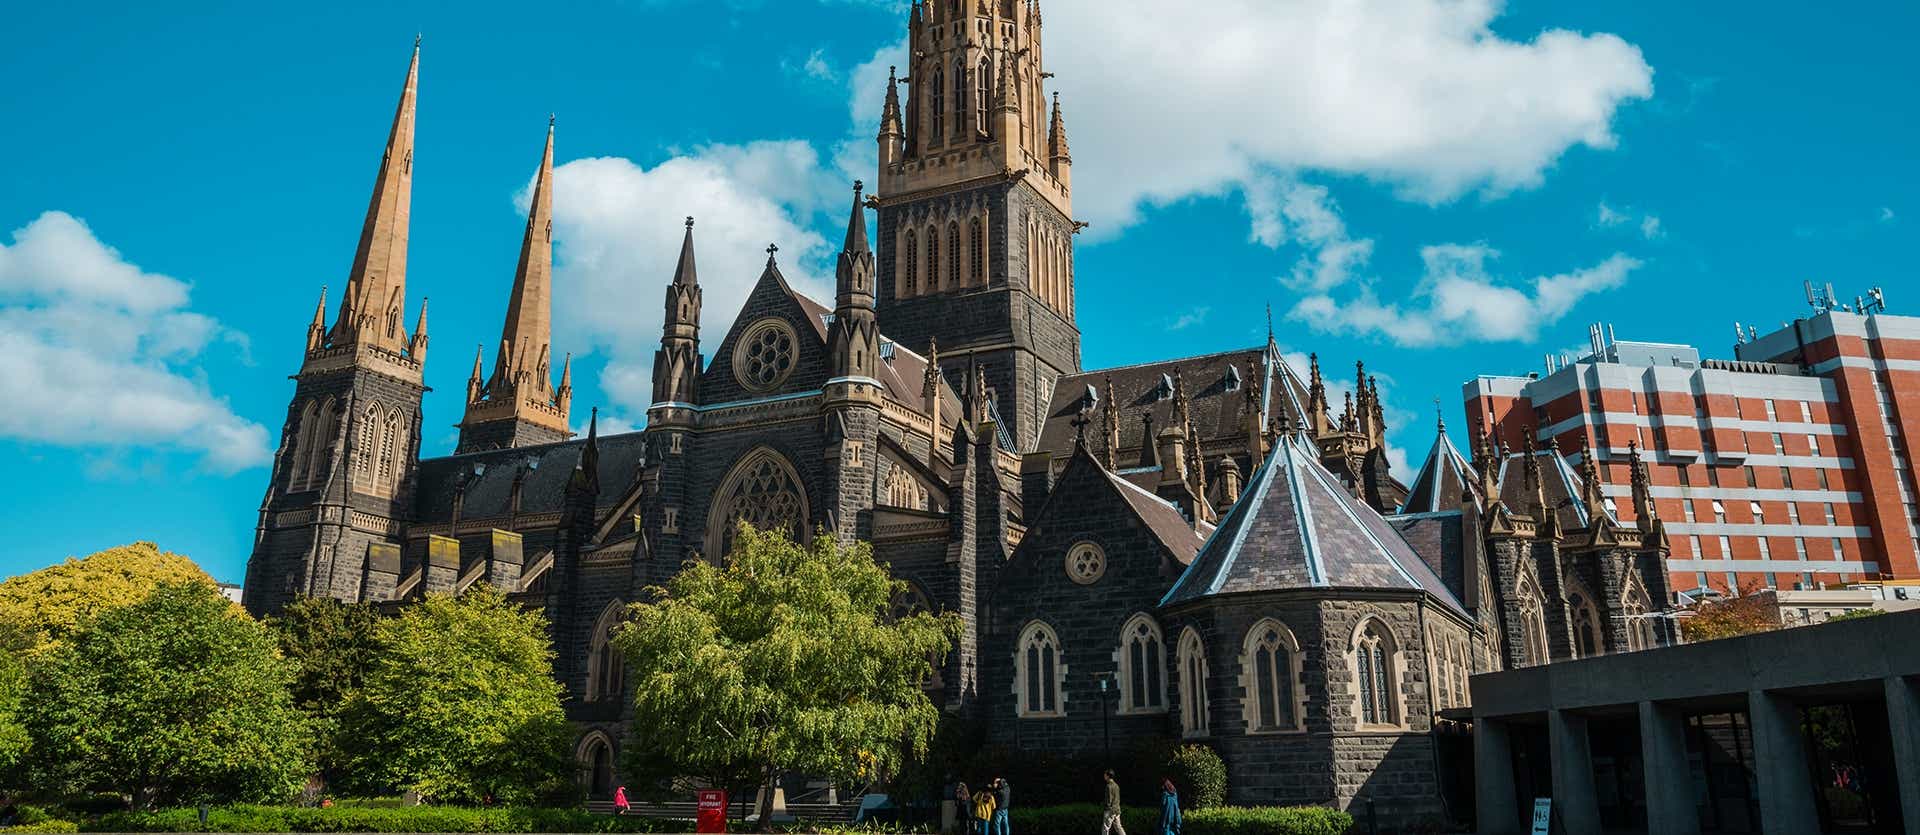 Catedral de St. Patrick's <span class="iconos separador"></span> Melbourne <span class="iconos separador"></span> Australia